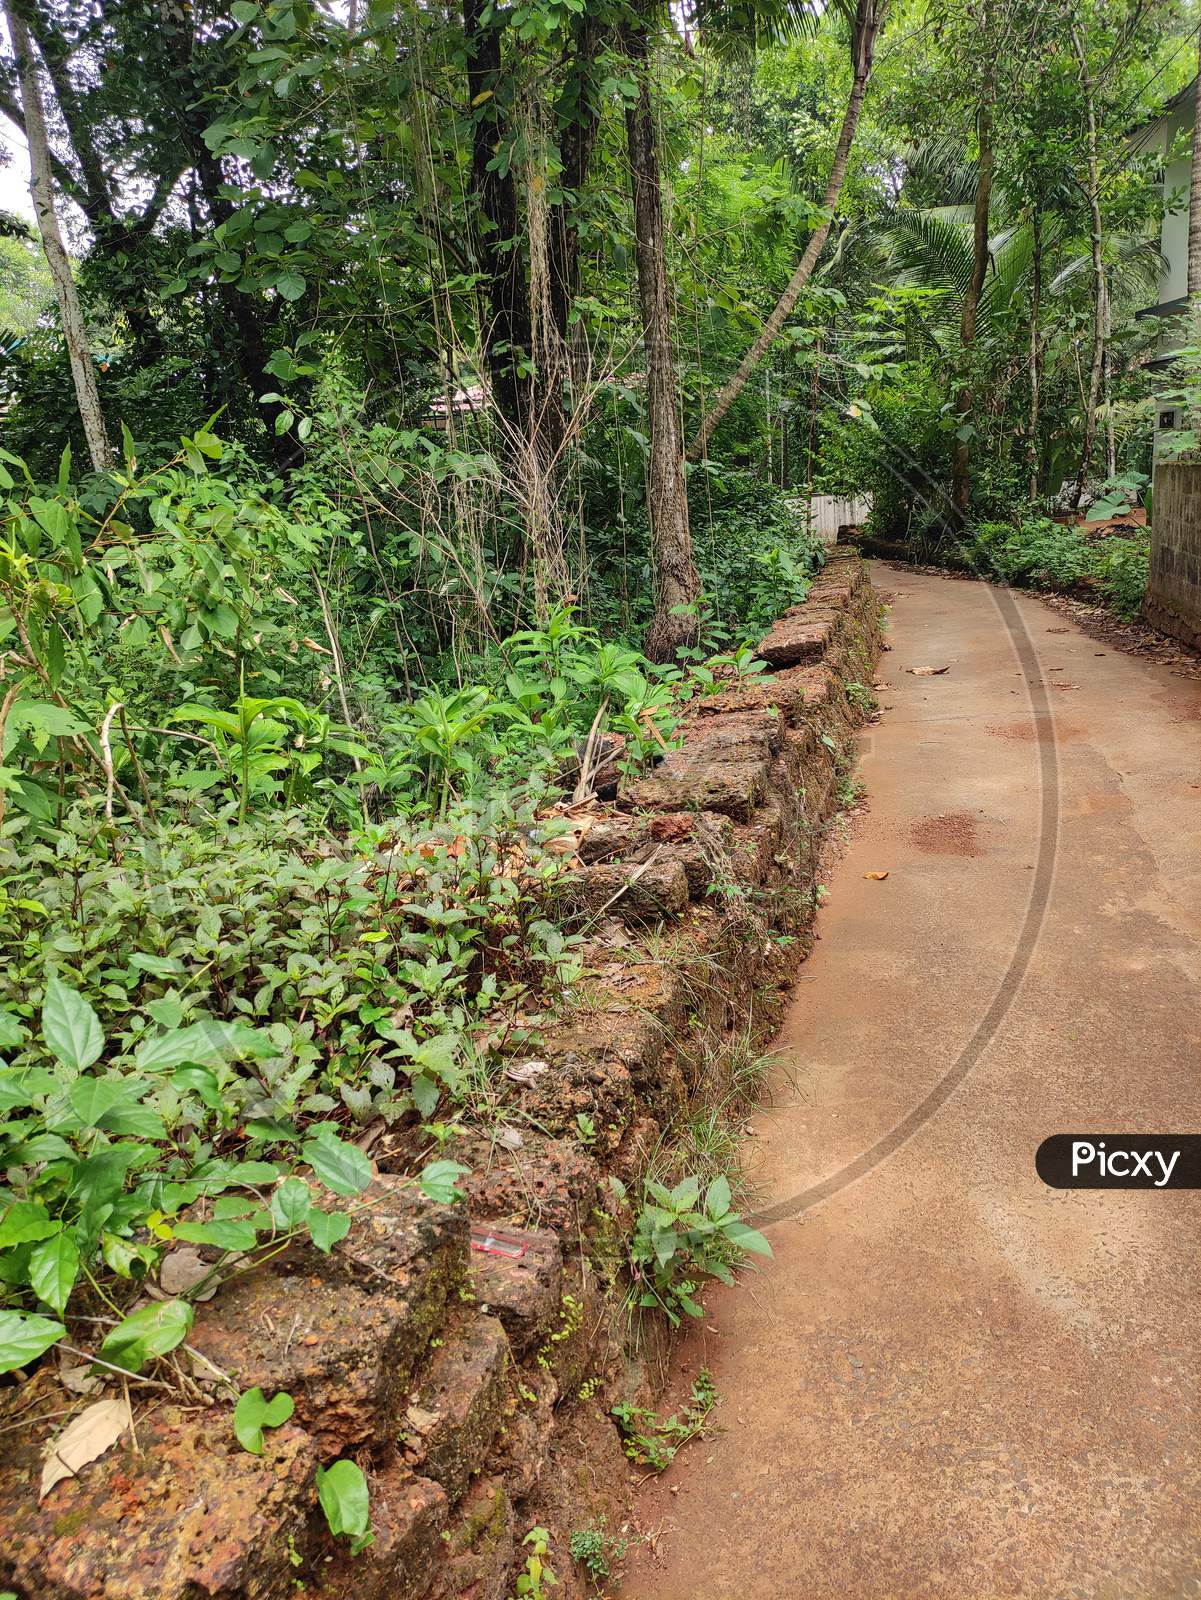 Small roads in Village areas,Kerala